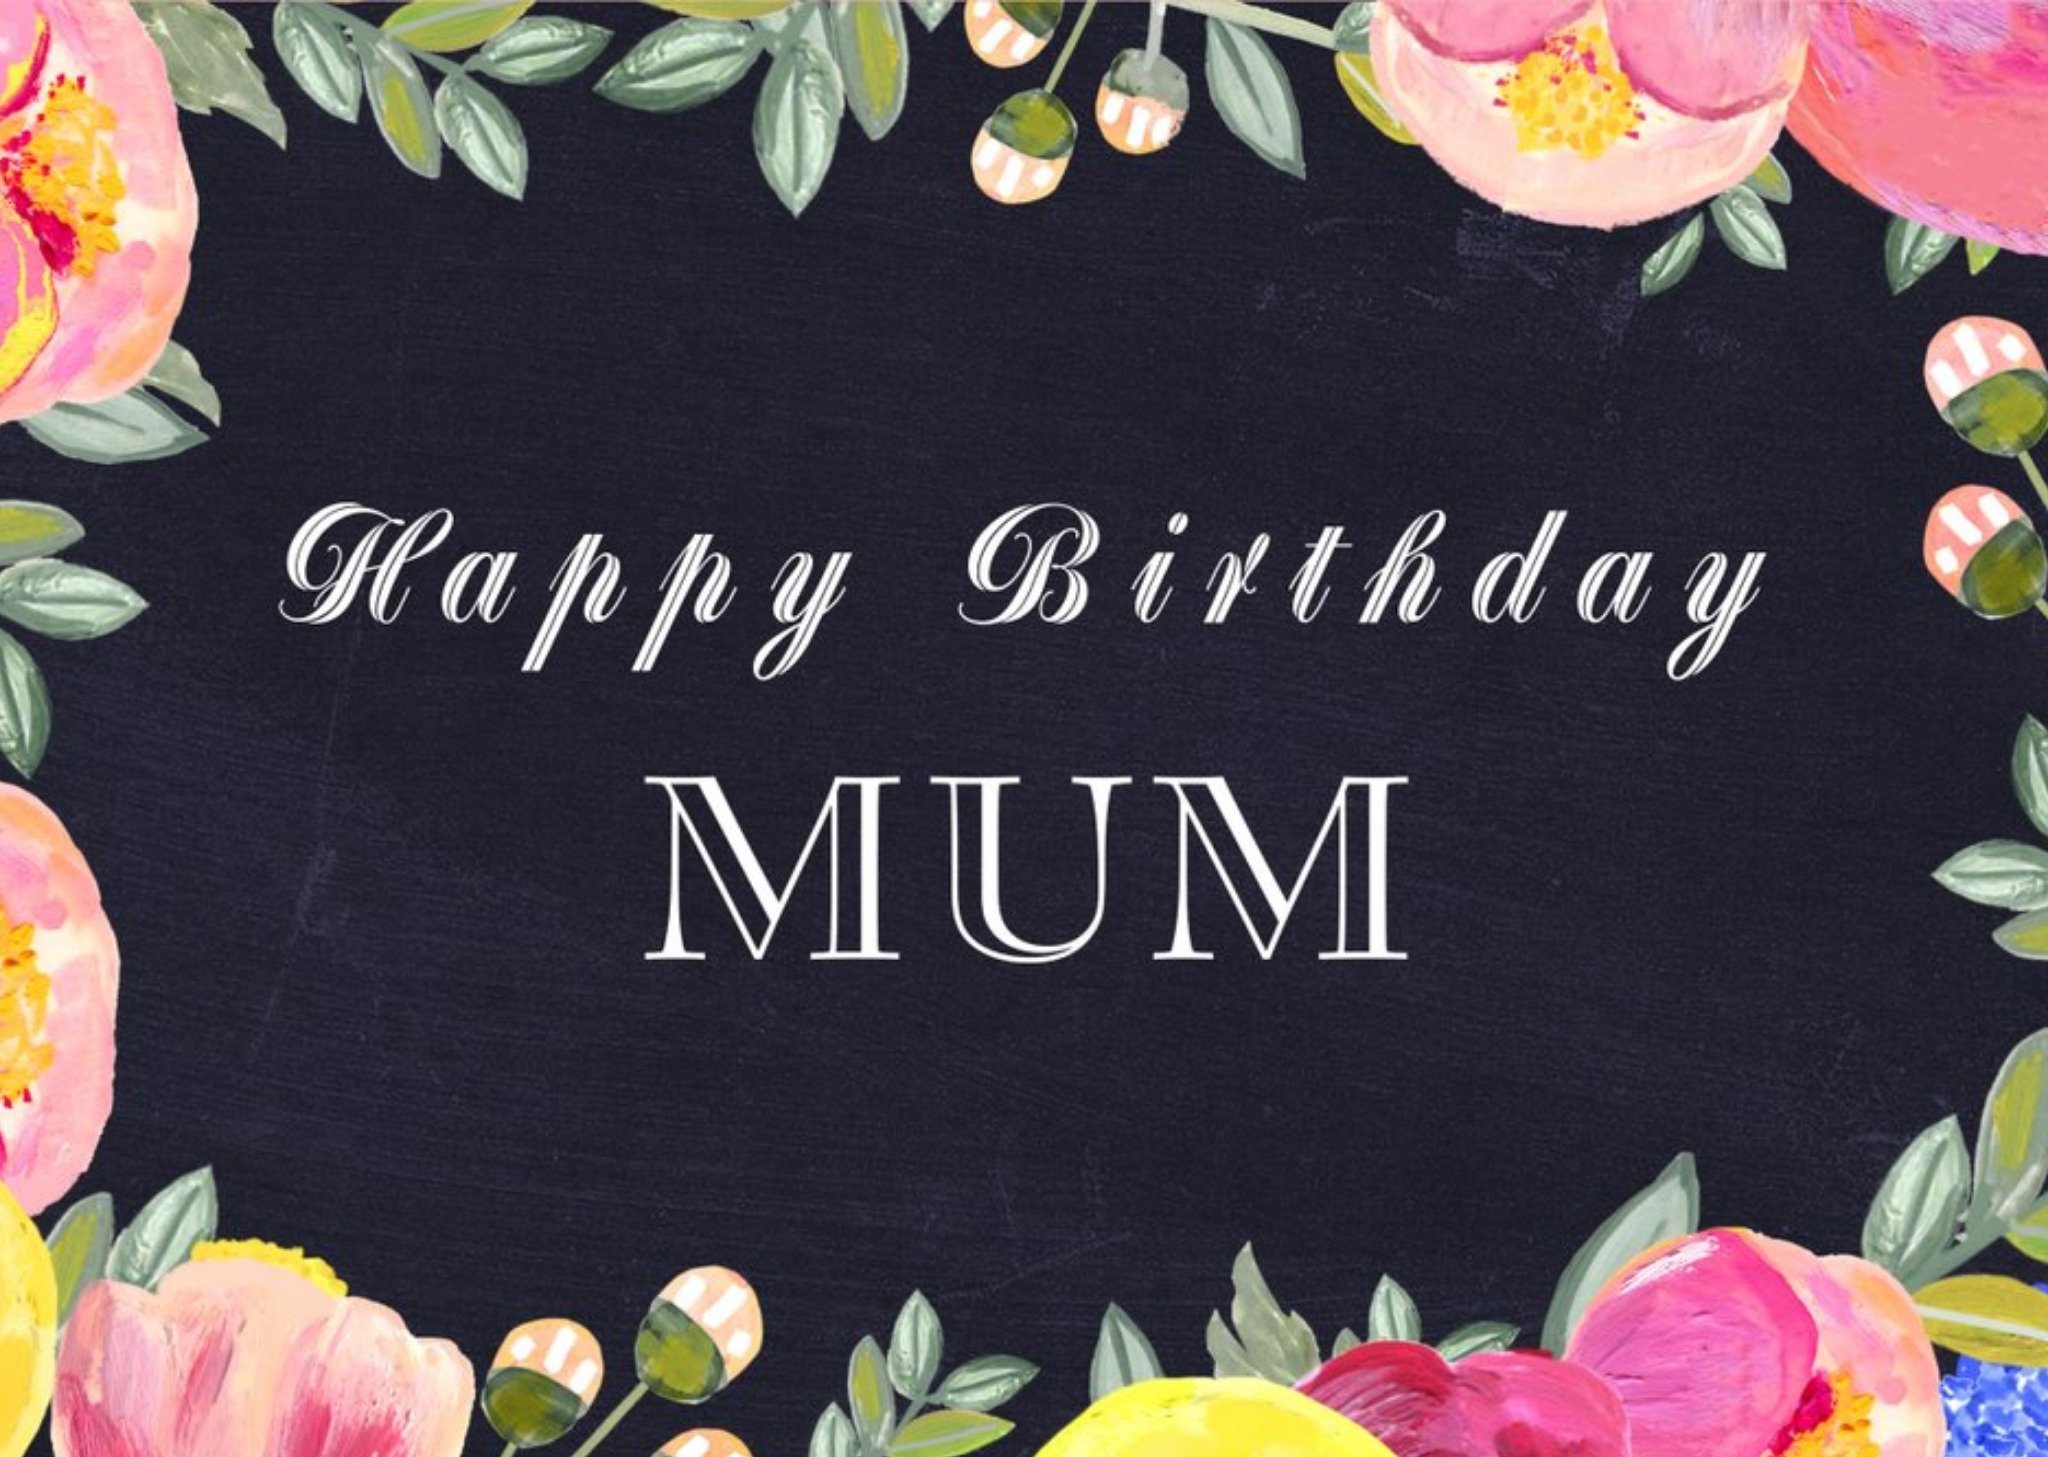 Moonpig Birthday Card - Mum - Floral - Traditional Ecard